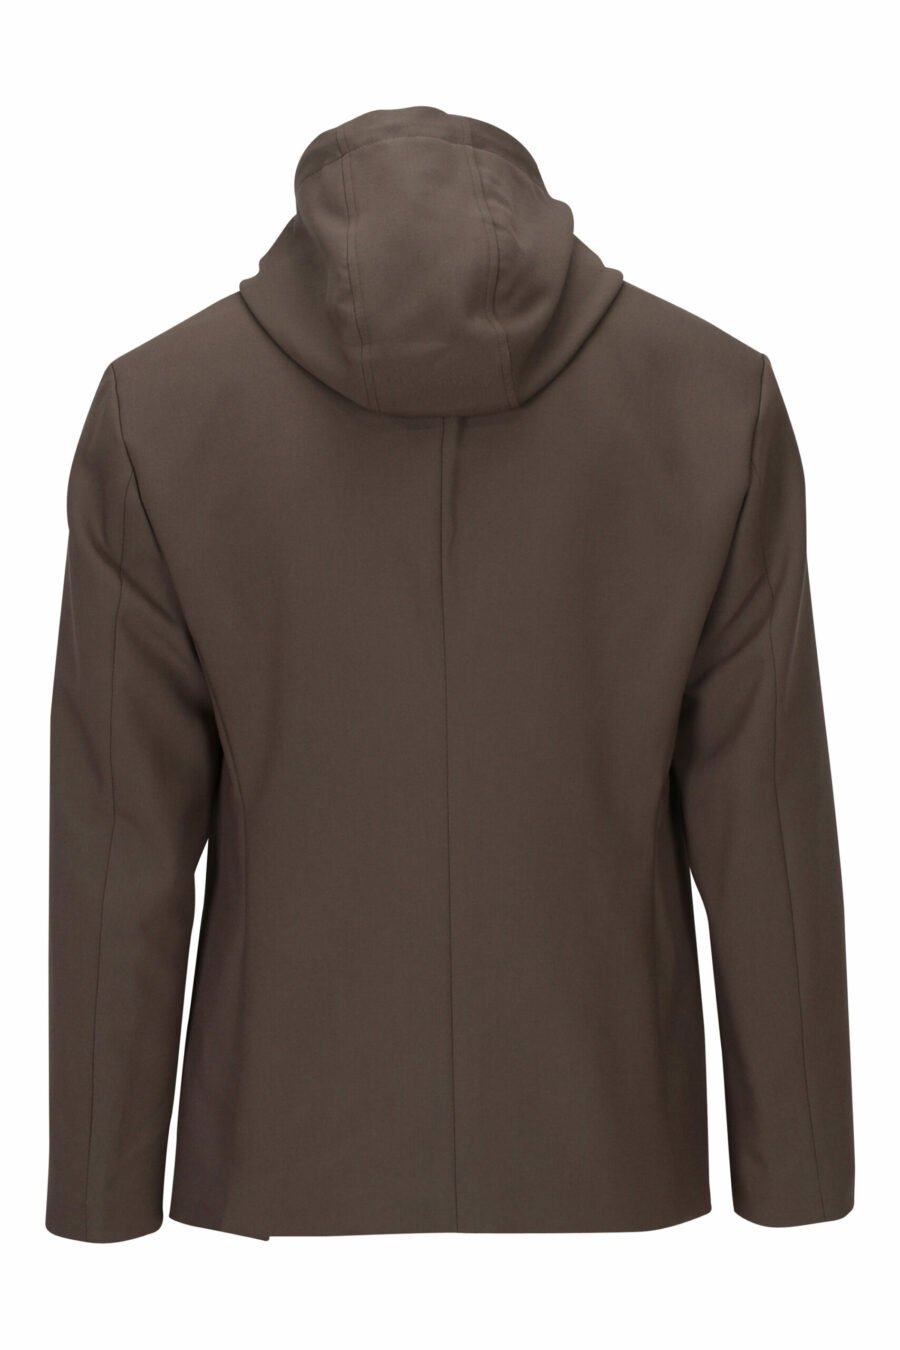 Beige blazer with hoodie and mini logo - 8057767407766 2 scaled